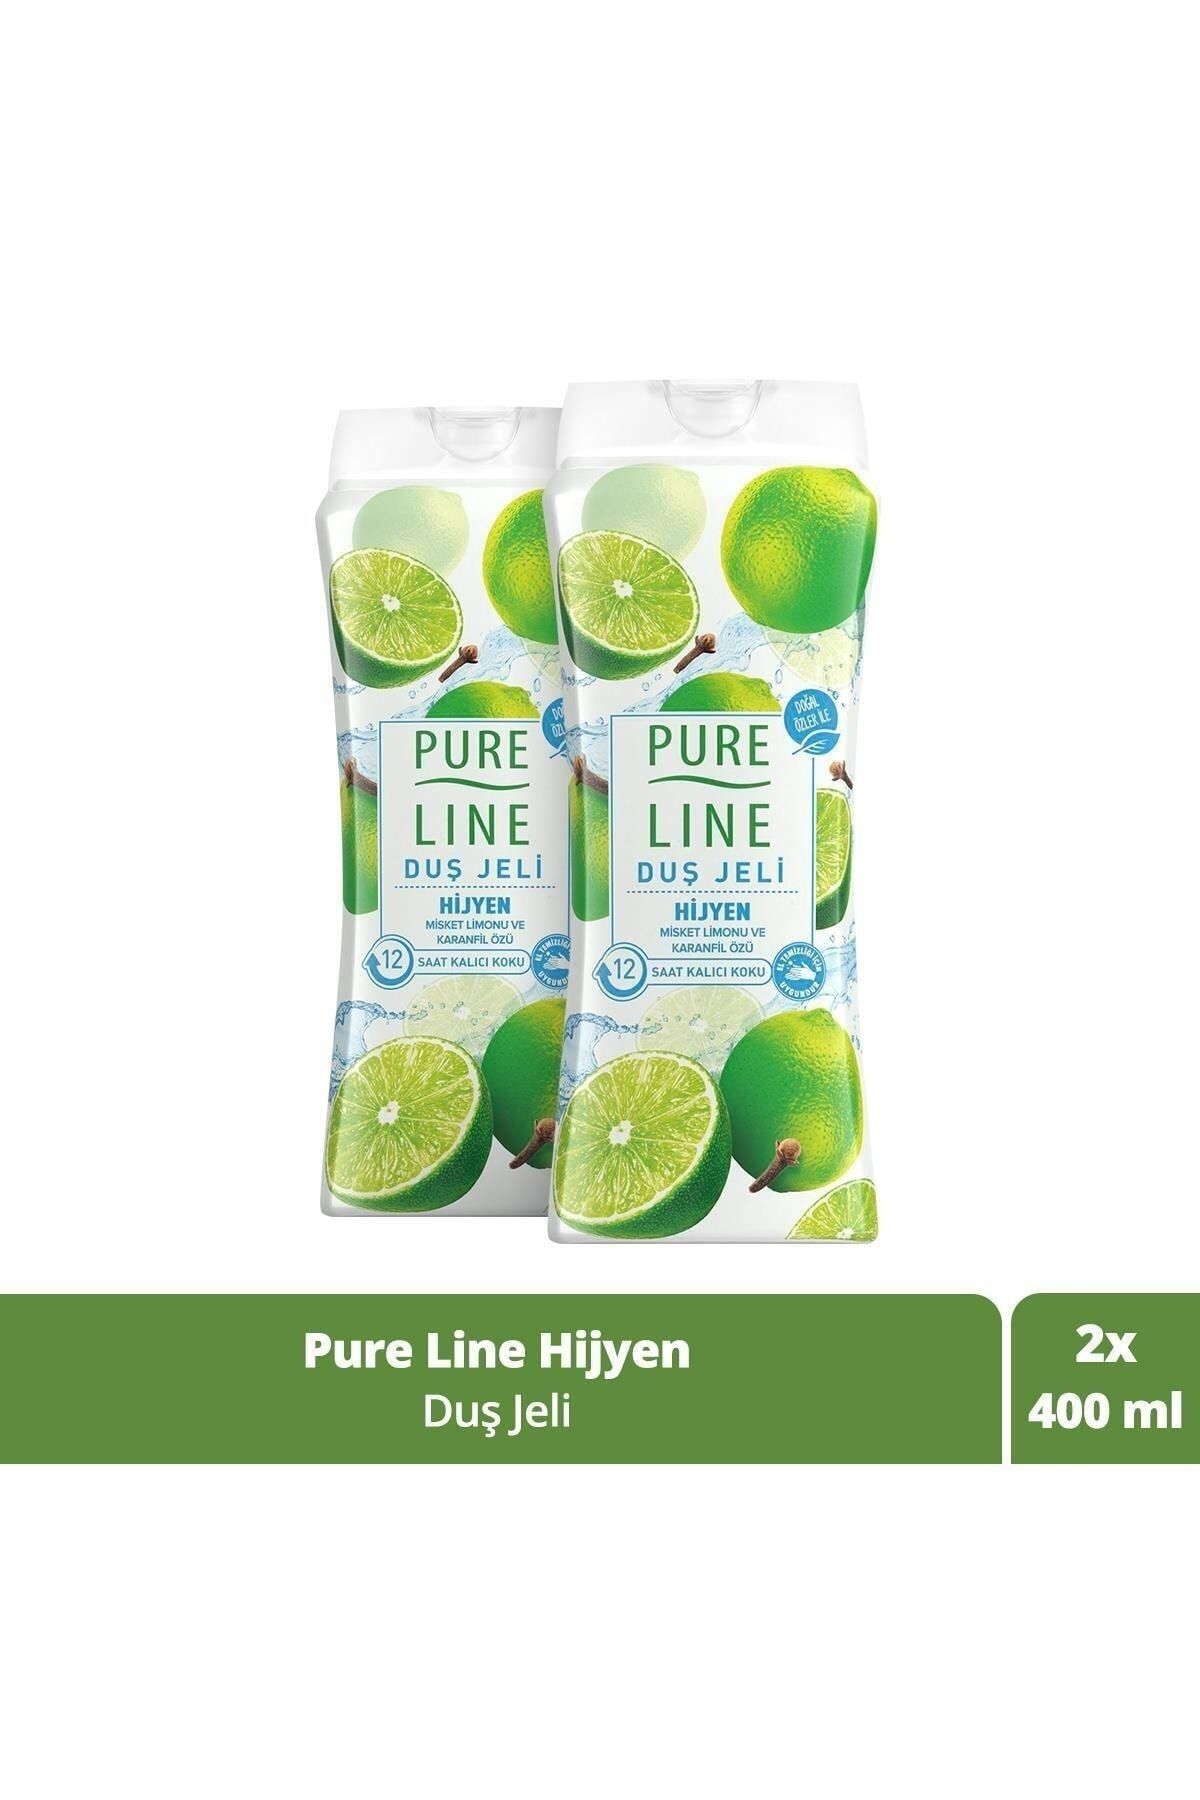 Pure Line Hijyen Misket Limonu & Karanfil Özü Duş Jeli 400 ml x2